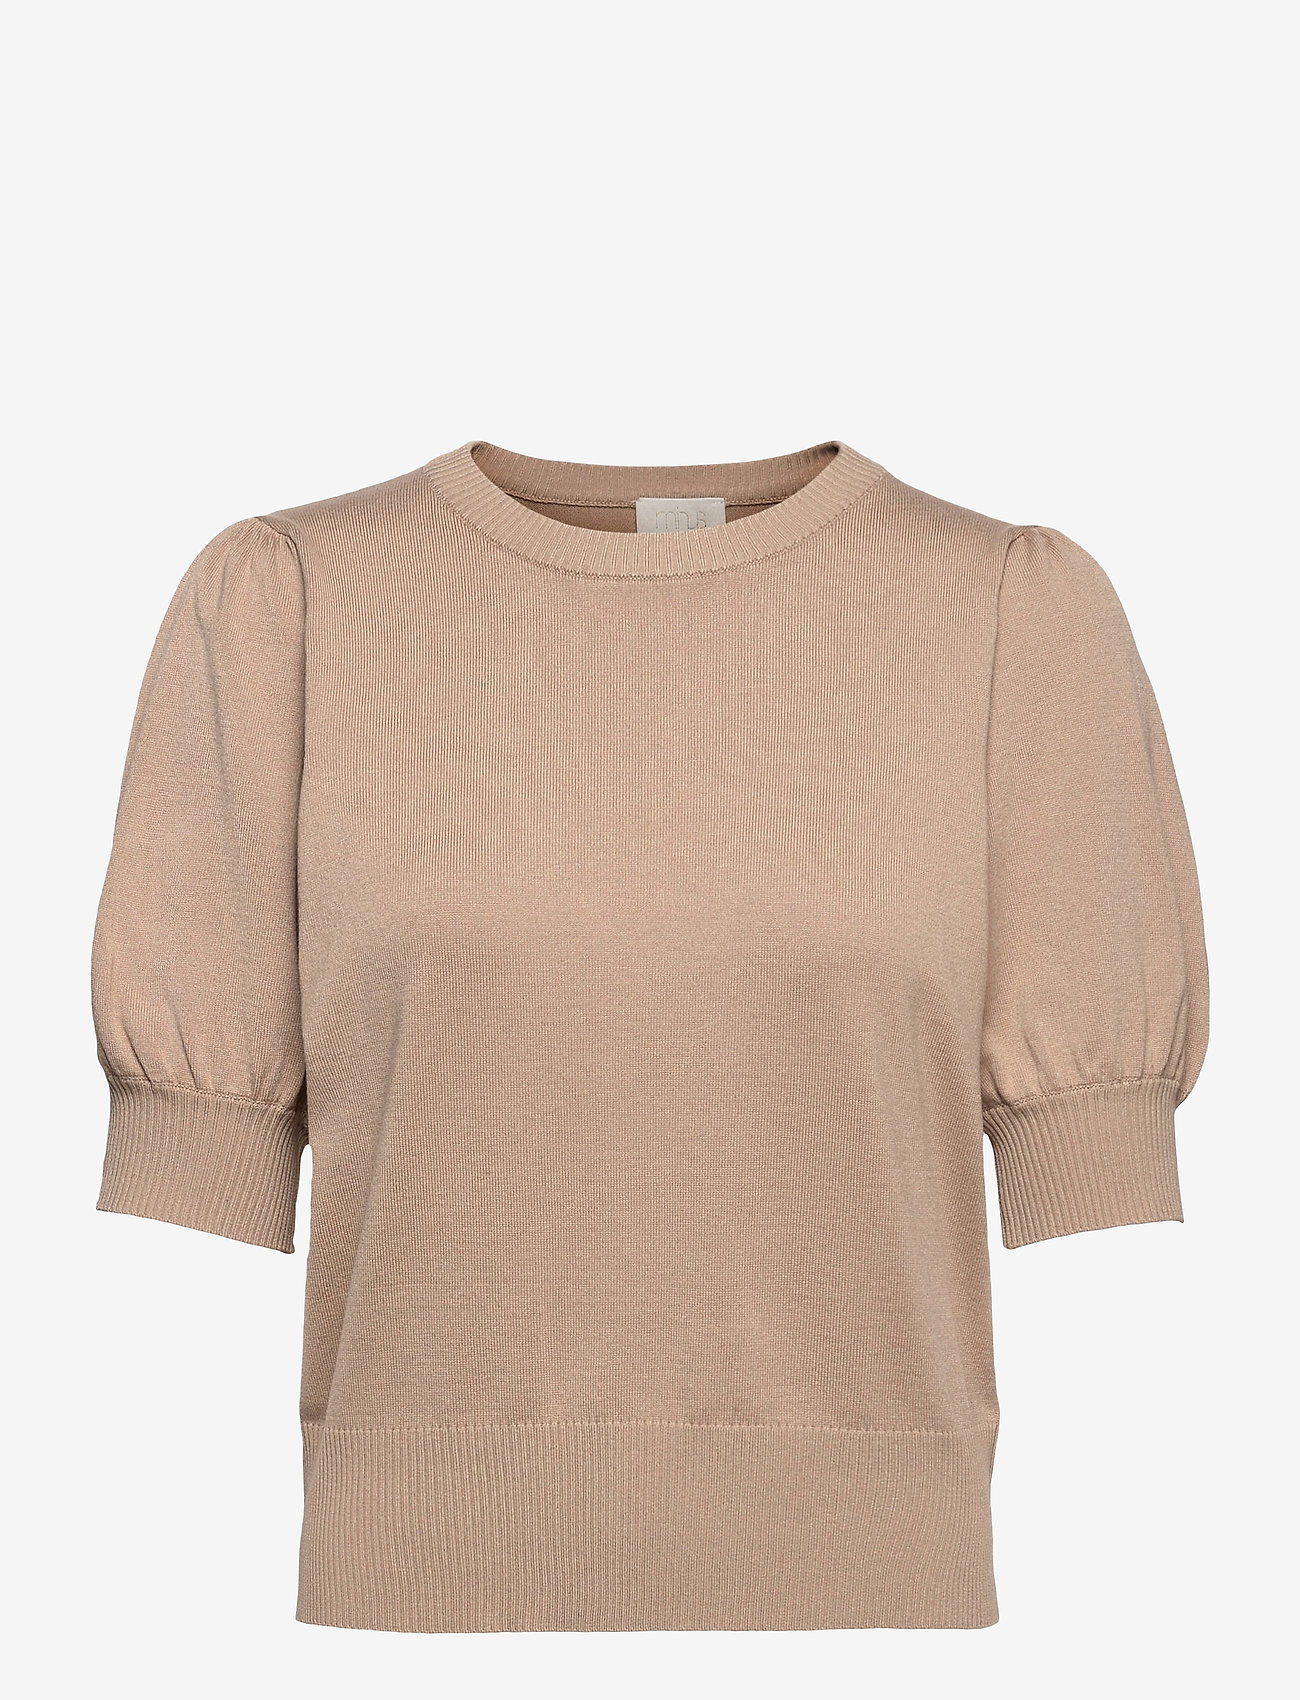 Minus - Liva Strik T-Shirt - pullover - nomad sand - 0